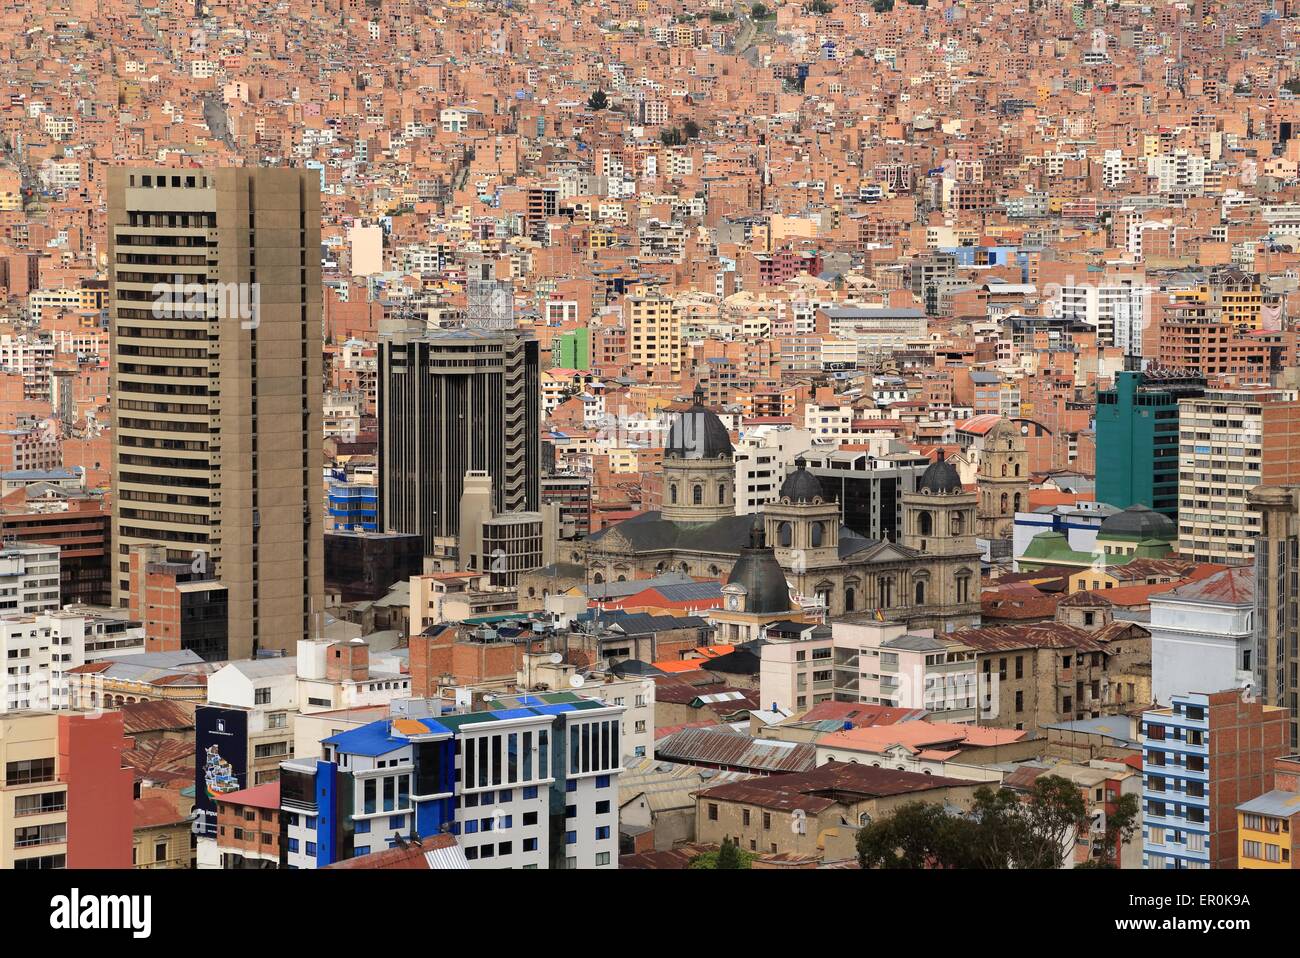 Nuestra Señora de La Paz, commonly known as La Paz, administrative capital of Bolivia in South America Stock Photo